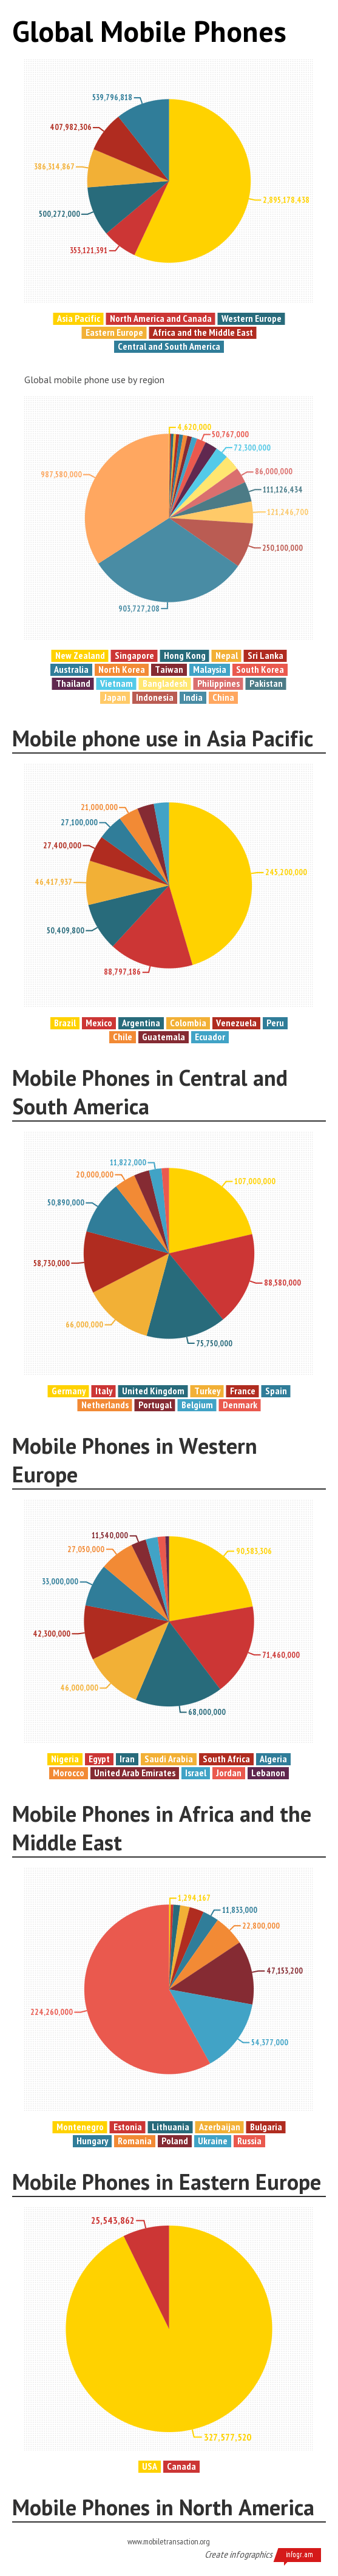 Global Mobile Phones_2